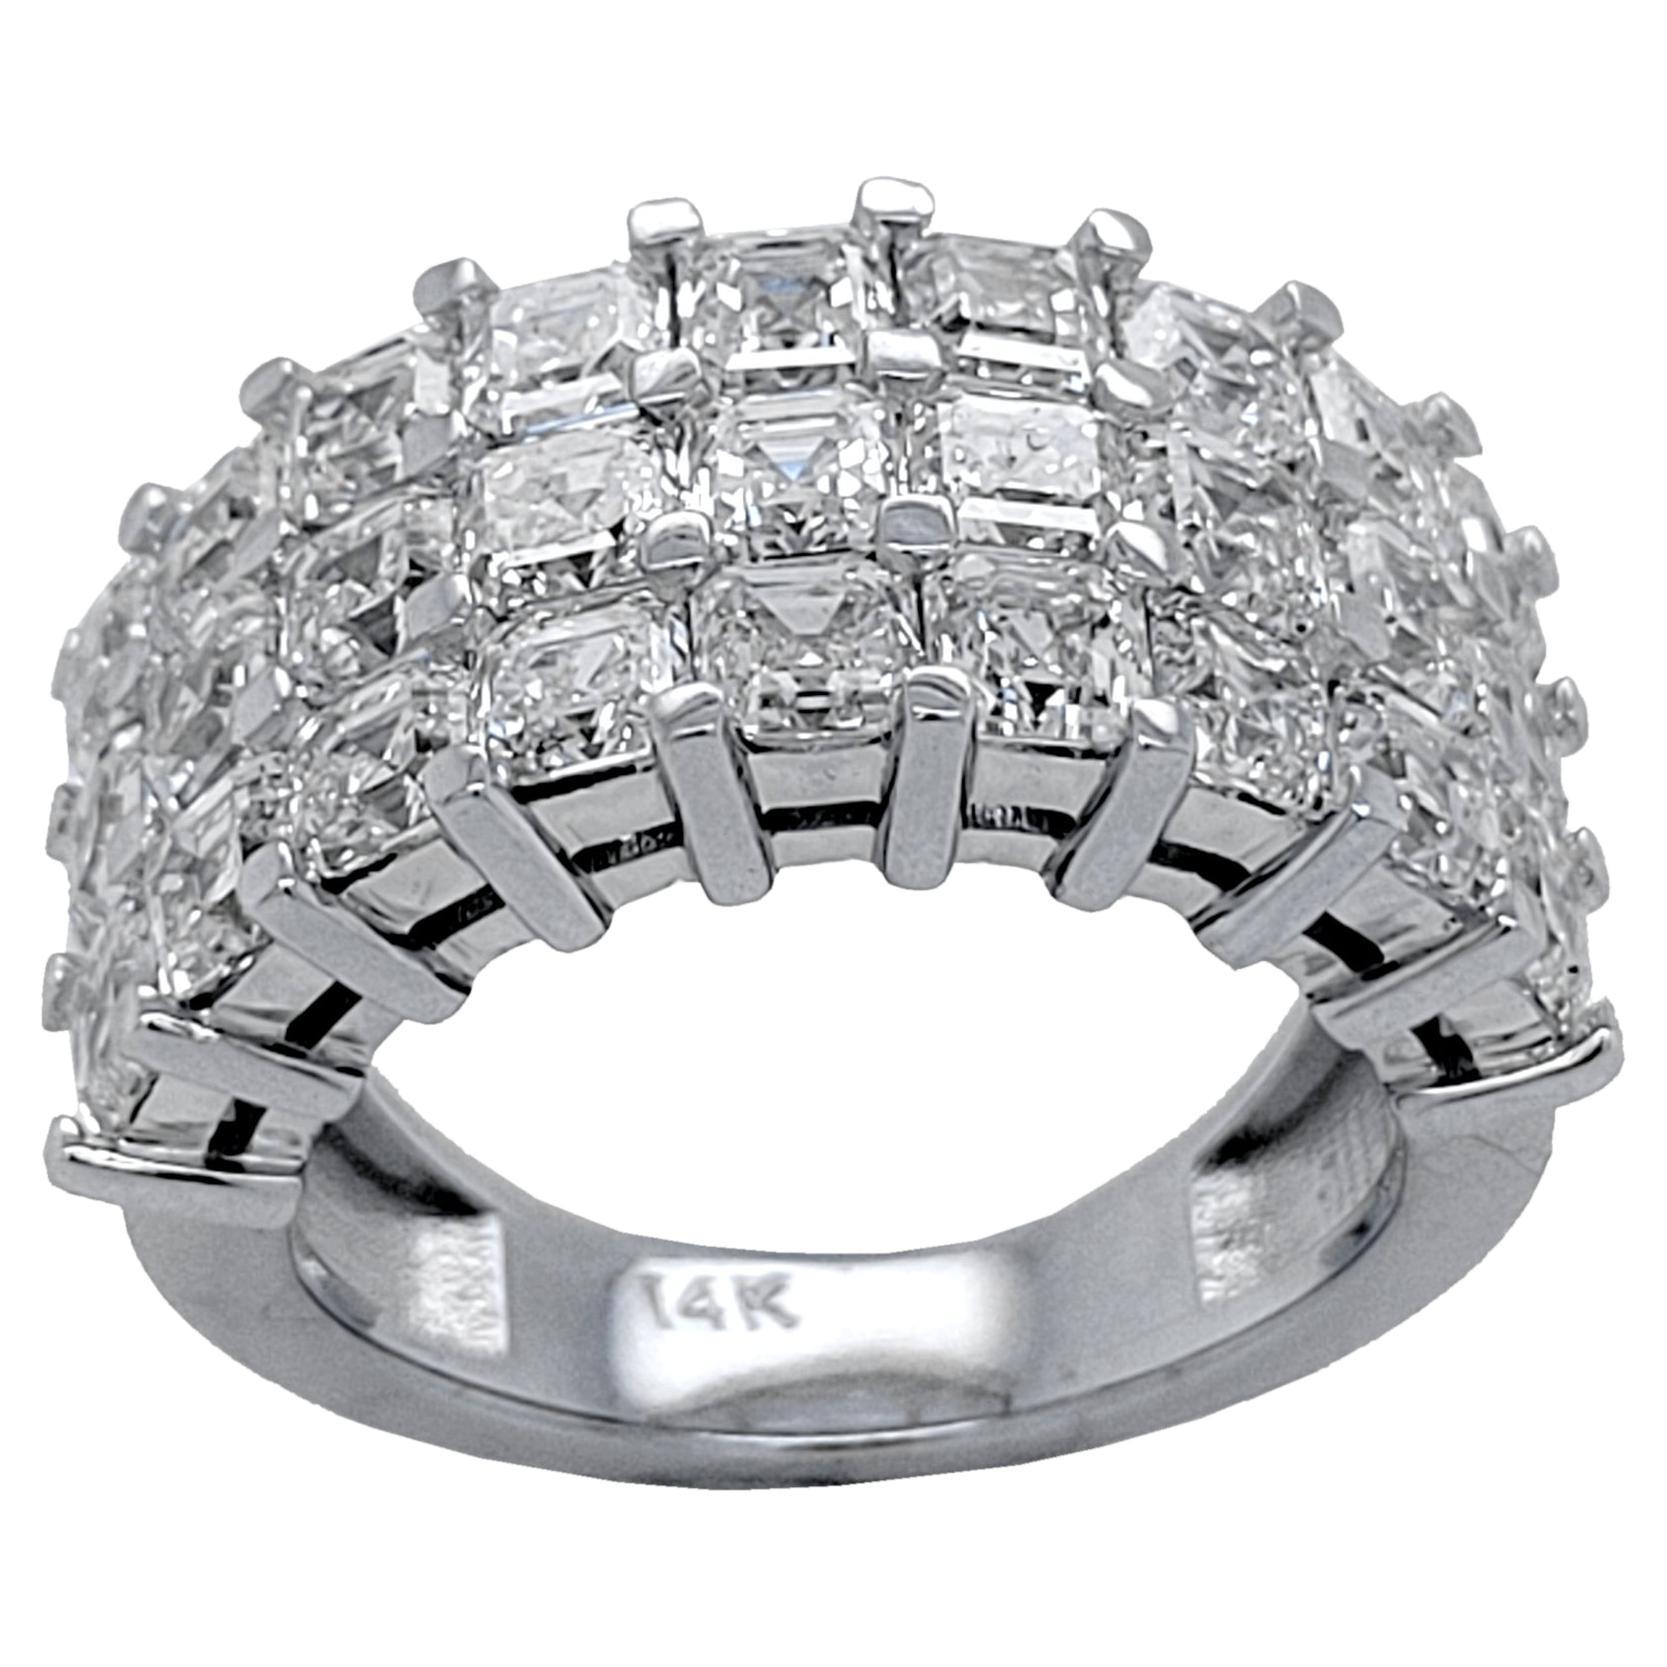 5.31 Ct 3 Row Asscher Cut 'Square Emerald Cut' Diamond Anniversary Ring For Sale